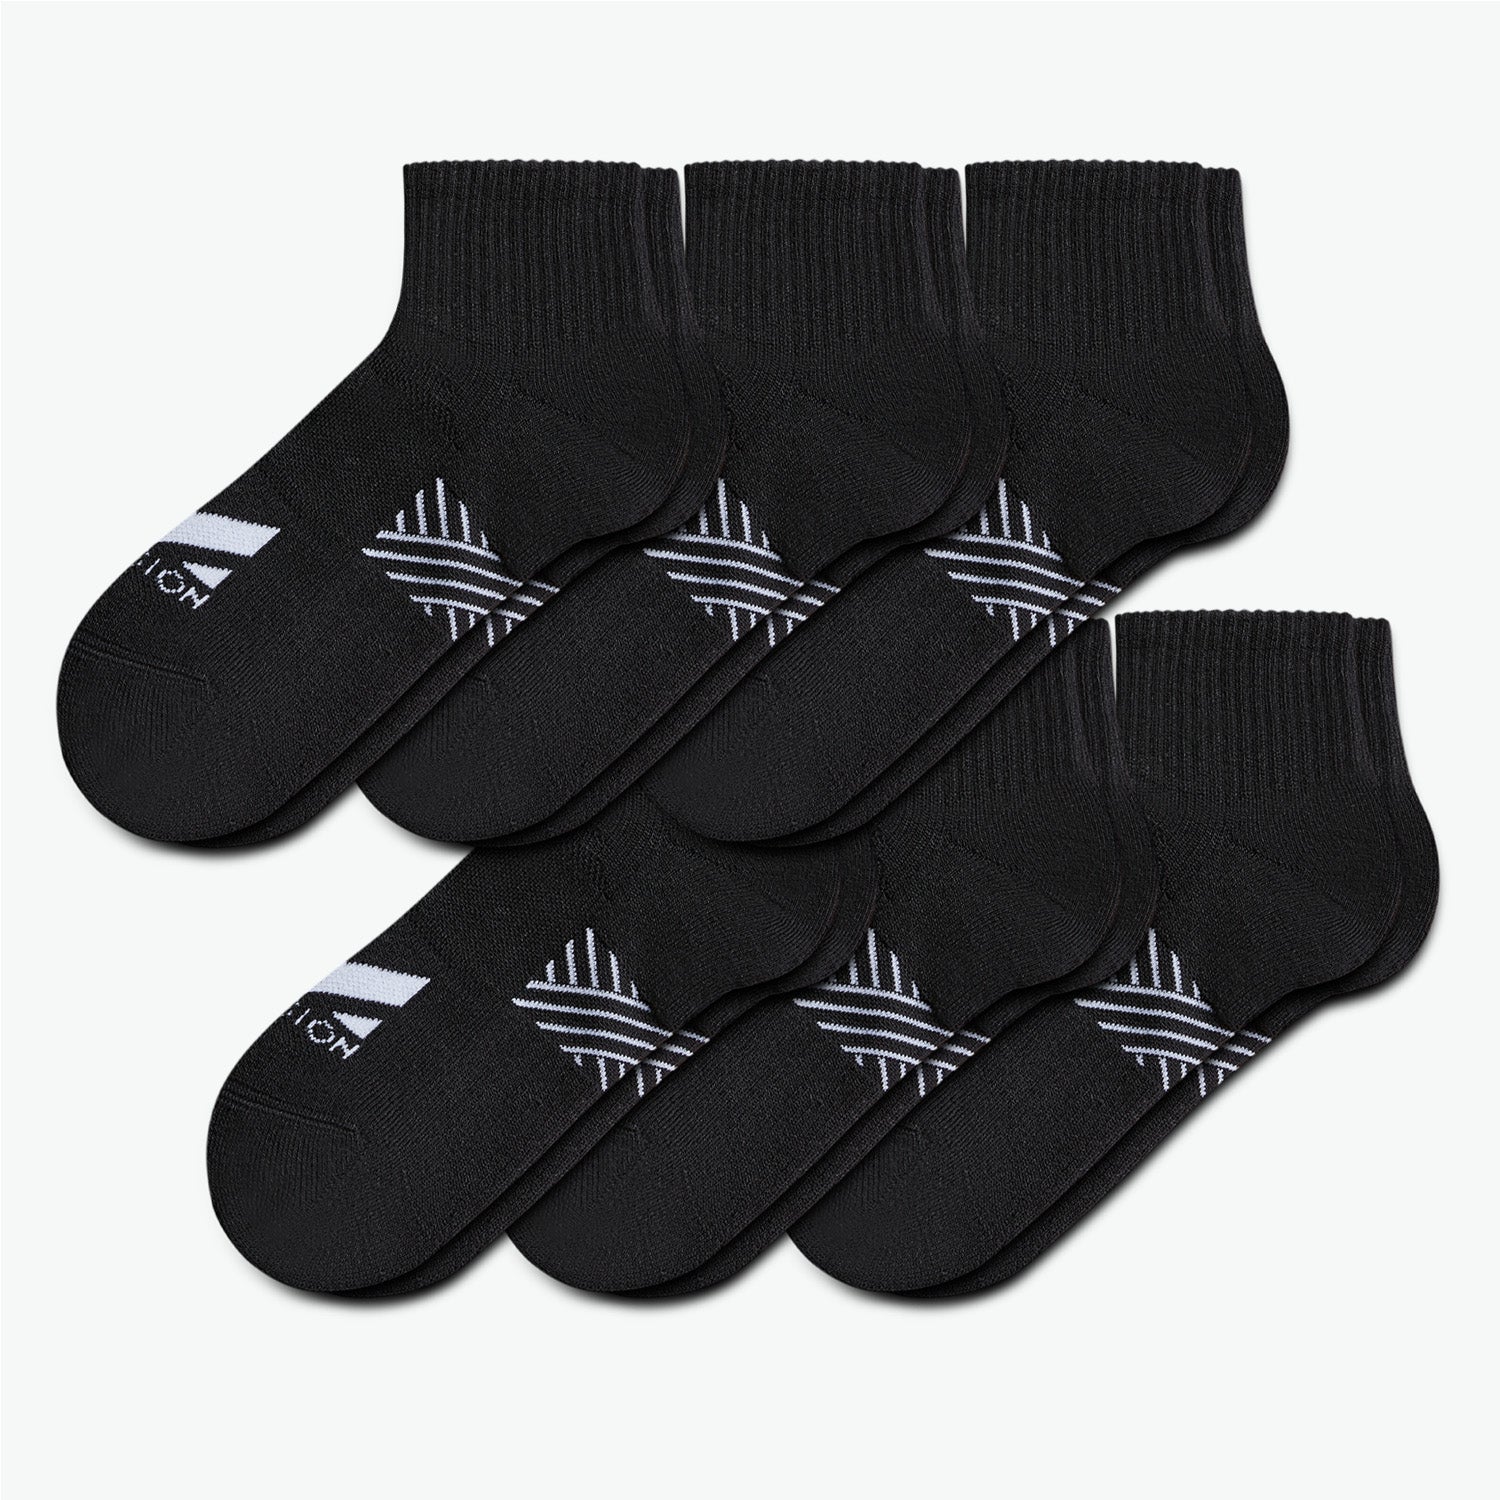 Pinnacle Dry Comfort Quarter Sock 6-Pack Socks MISSION M  (US 6-8) Black 